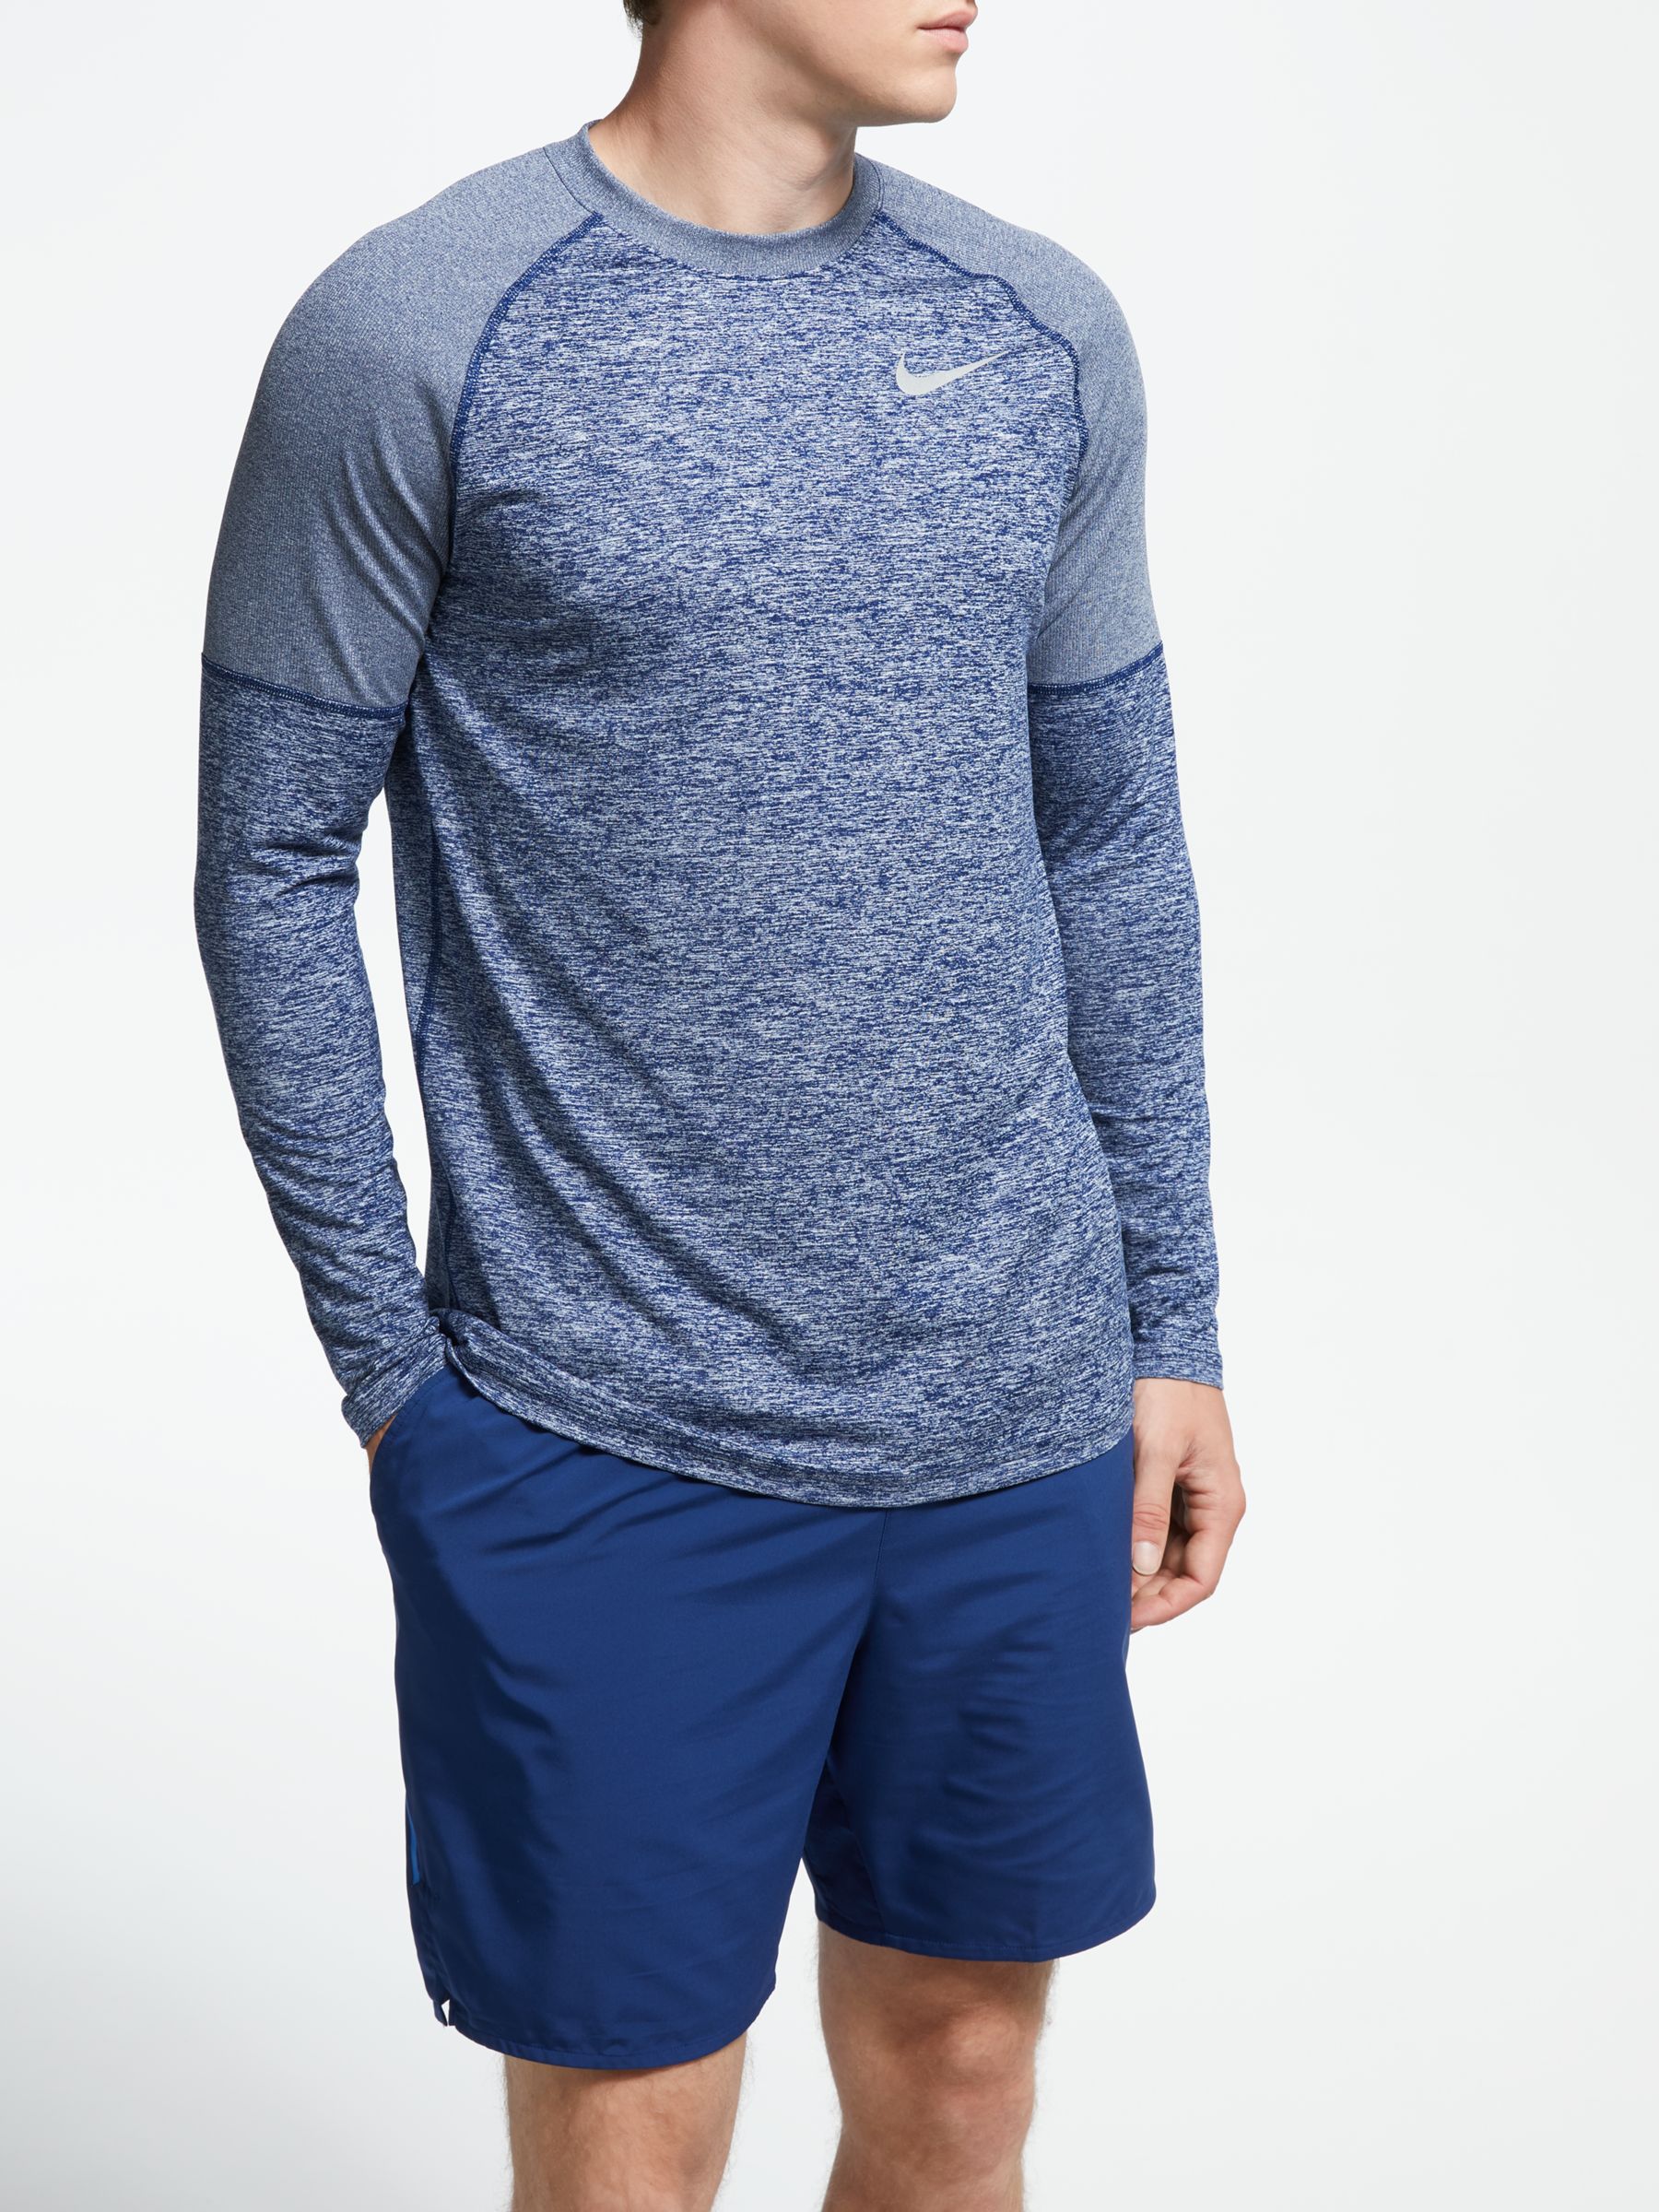 Nike Element Men's Long Sleeve Running Top at John Lewis & Partners